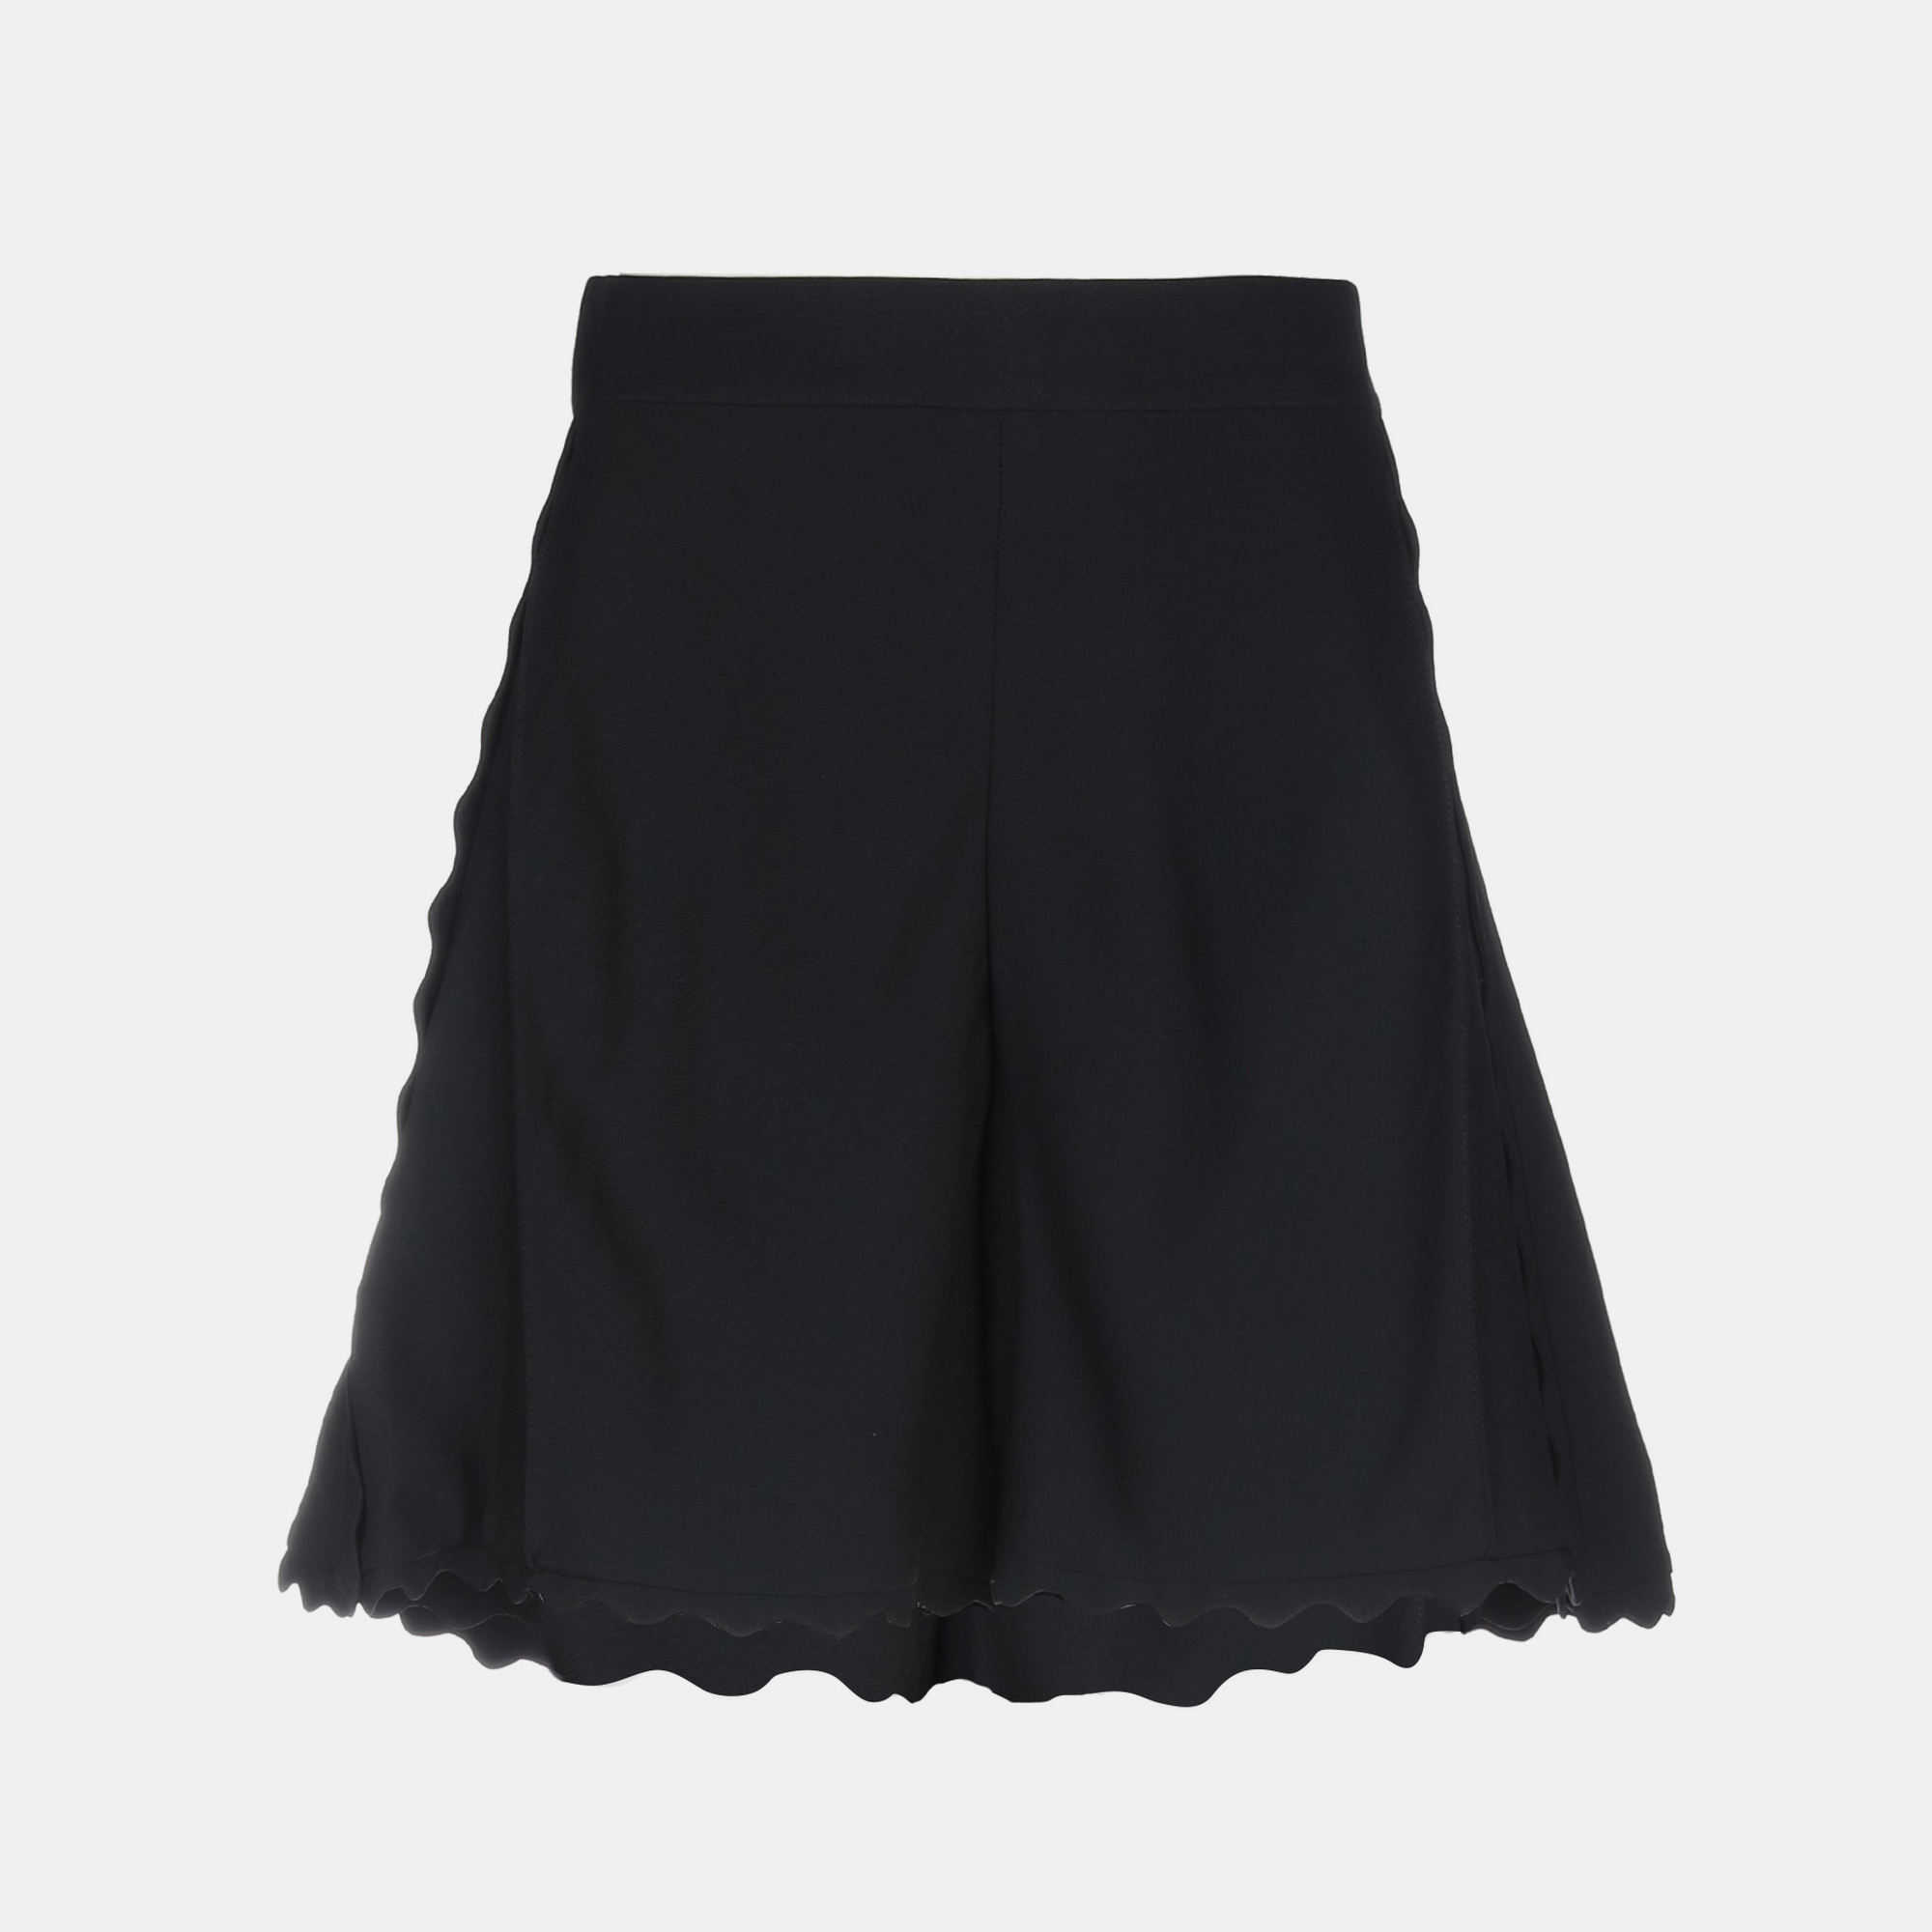 Chloe black crepe flared shorts s (fr 36)